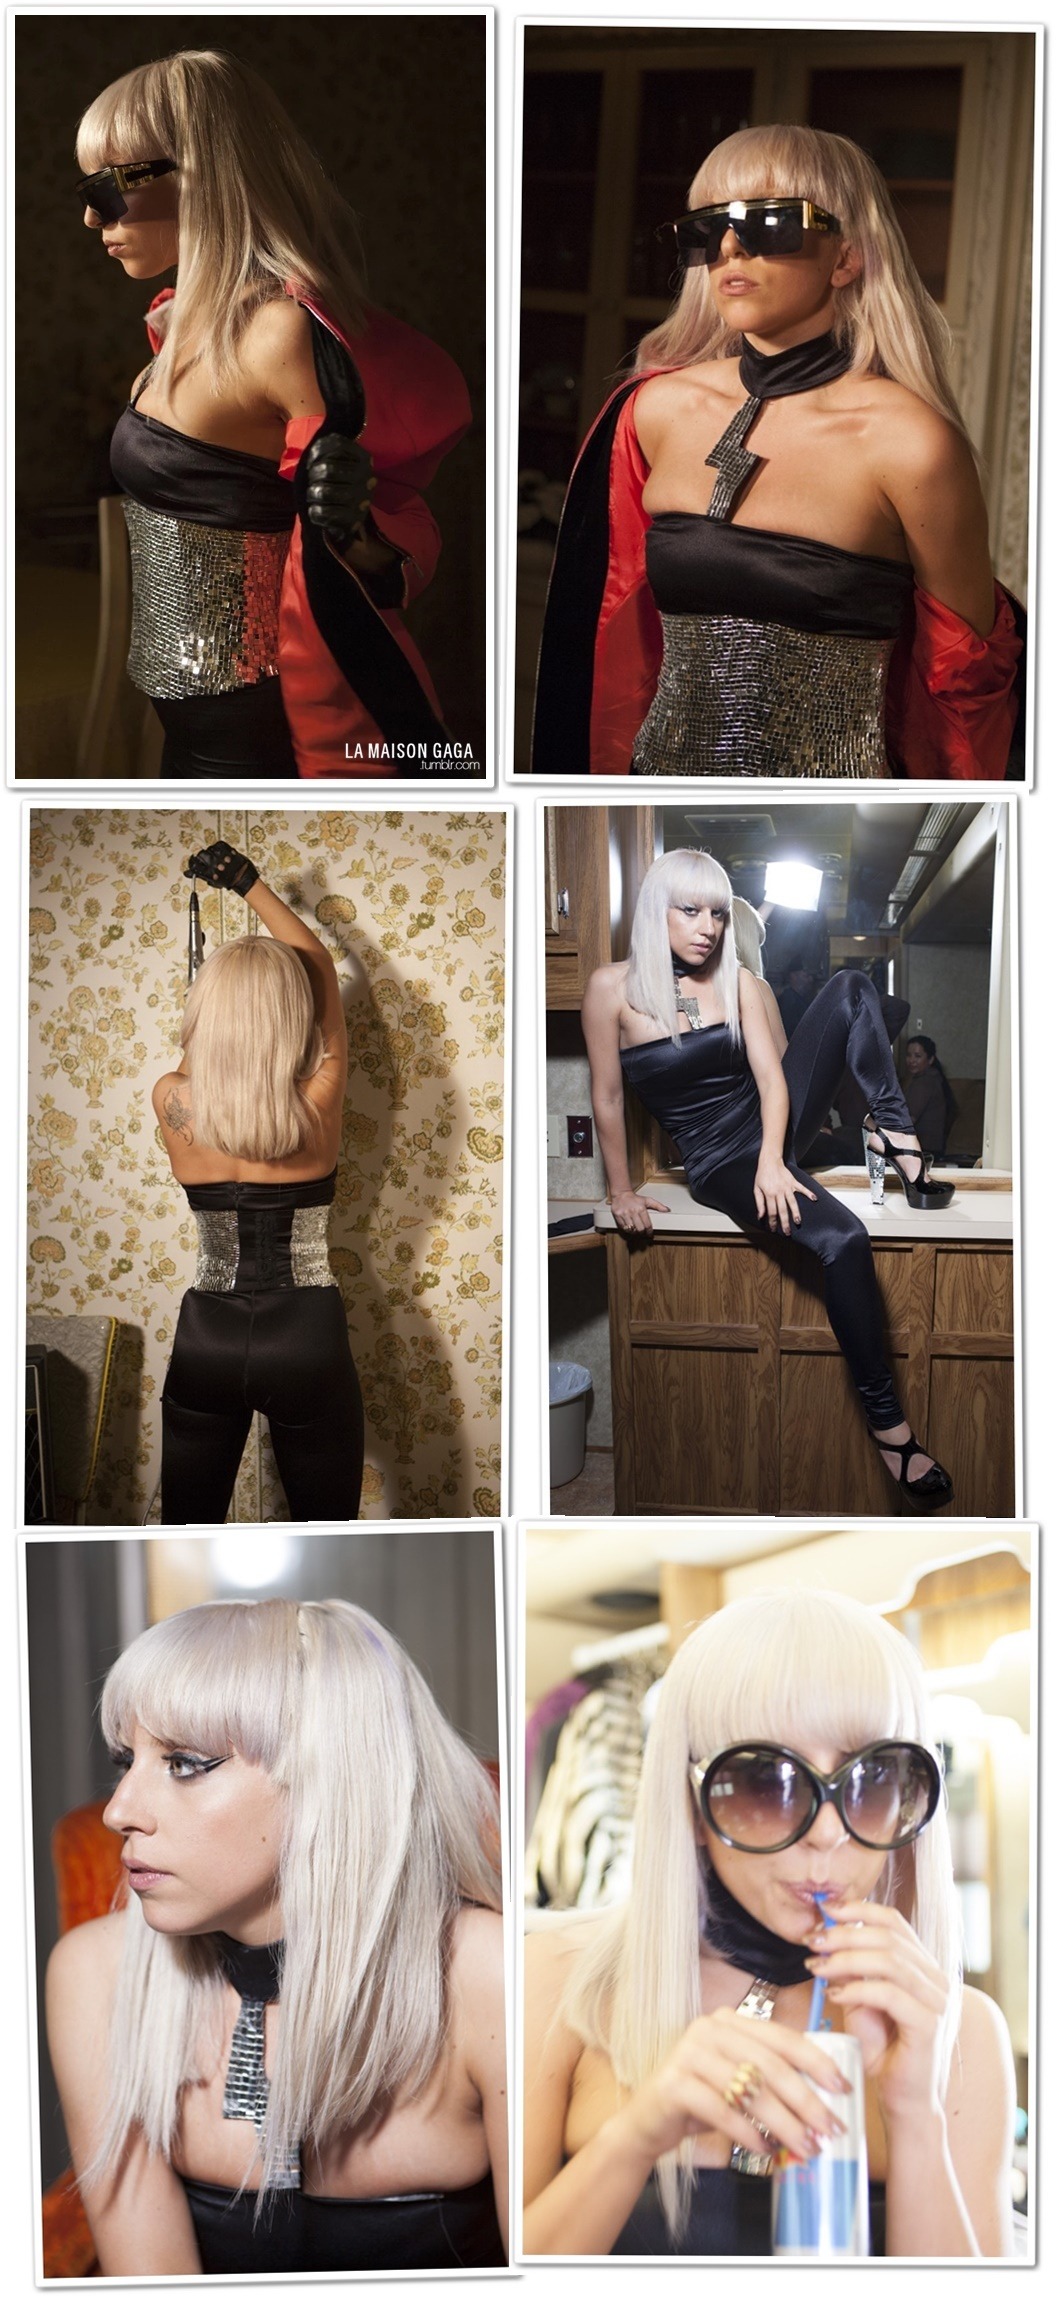 Lady Gaga Just Dance Costume Wallpapers